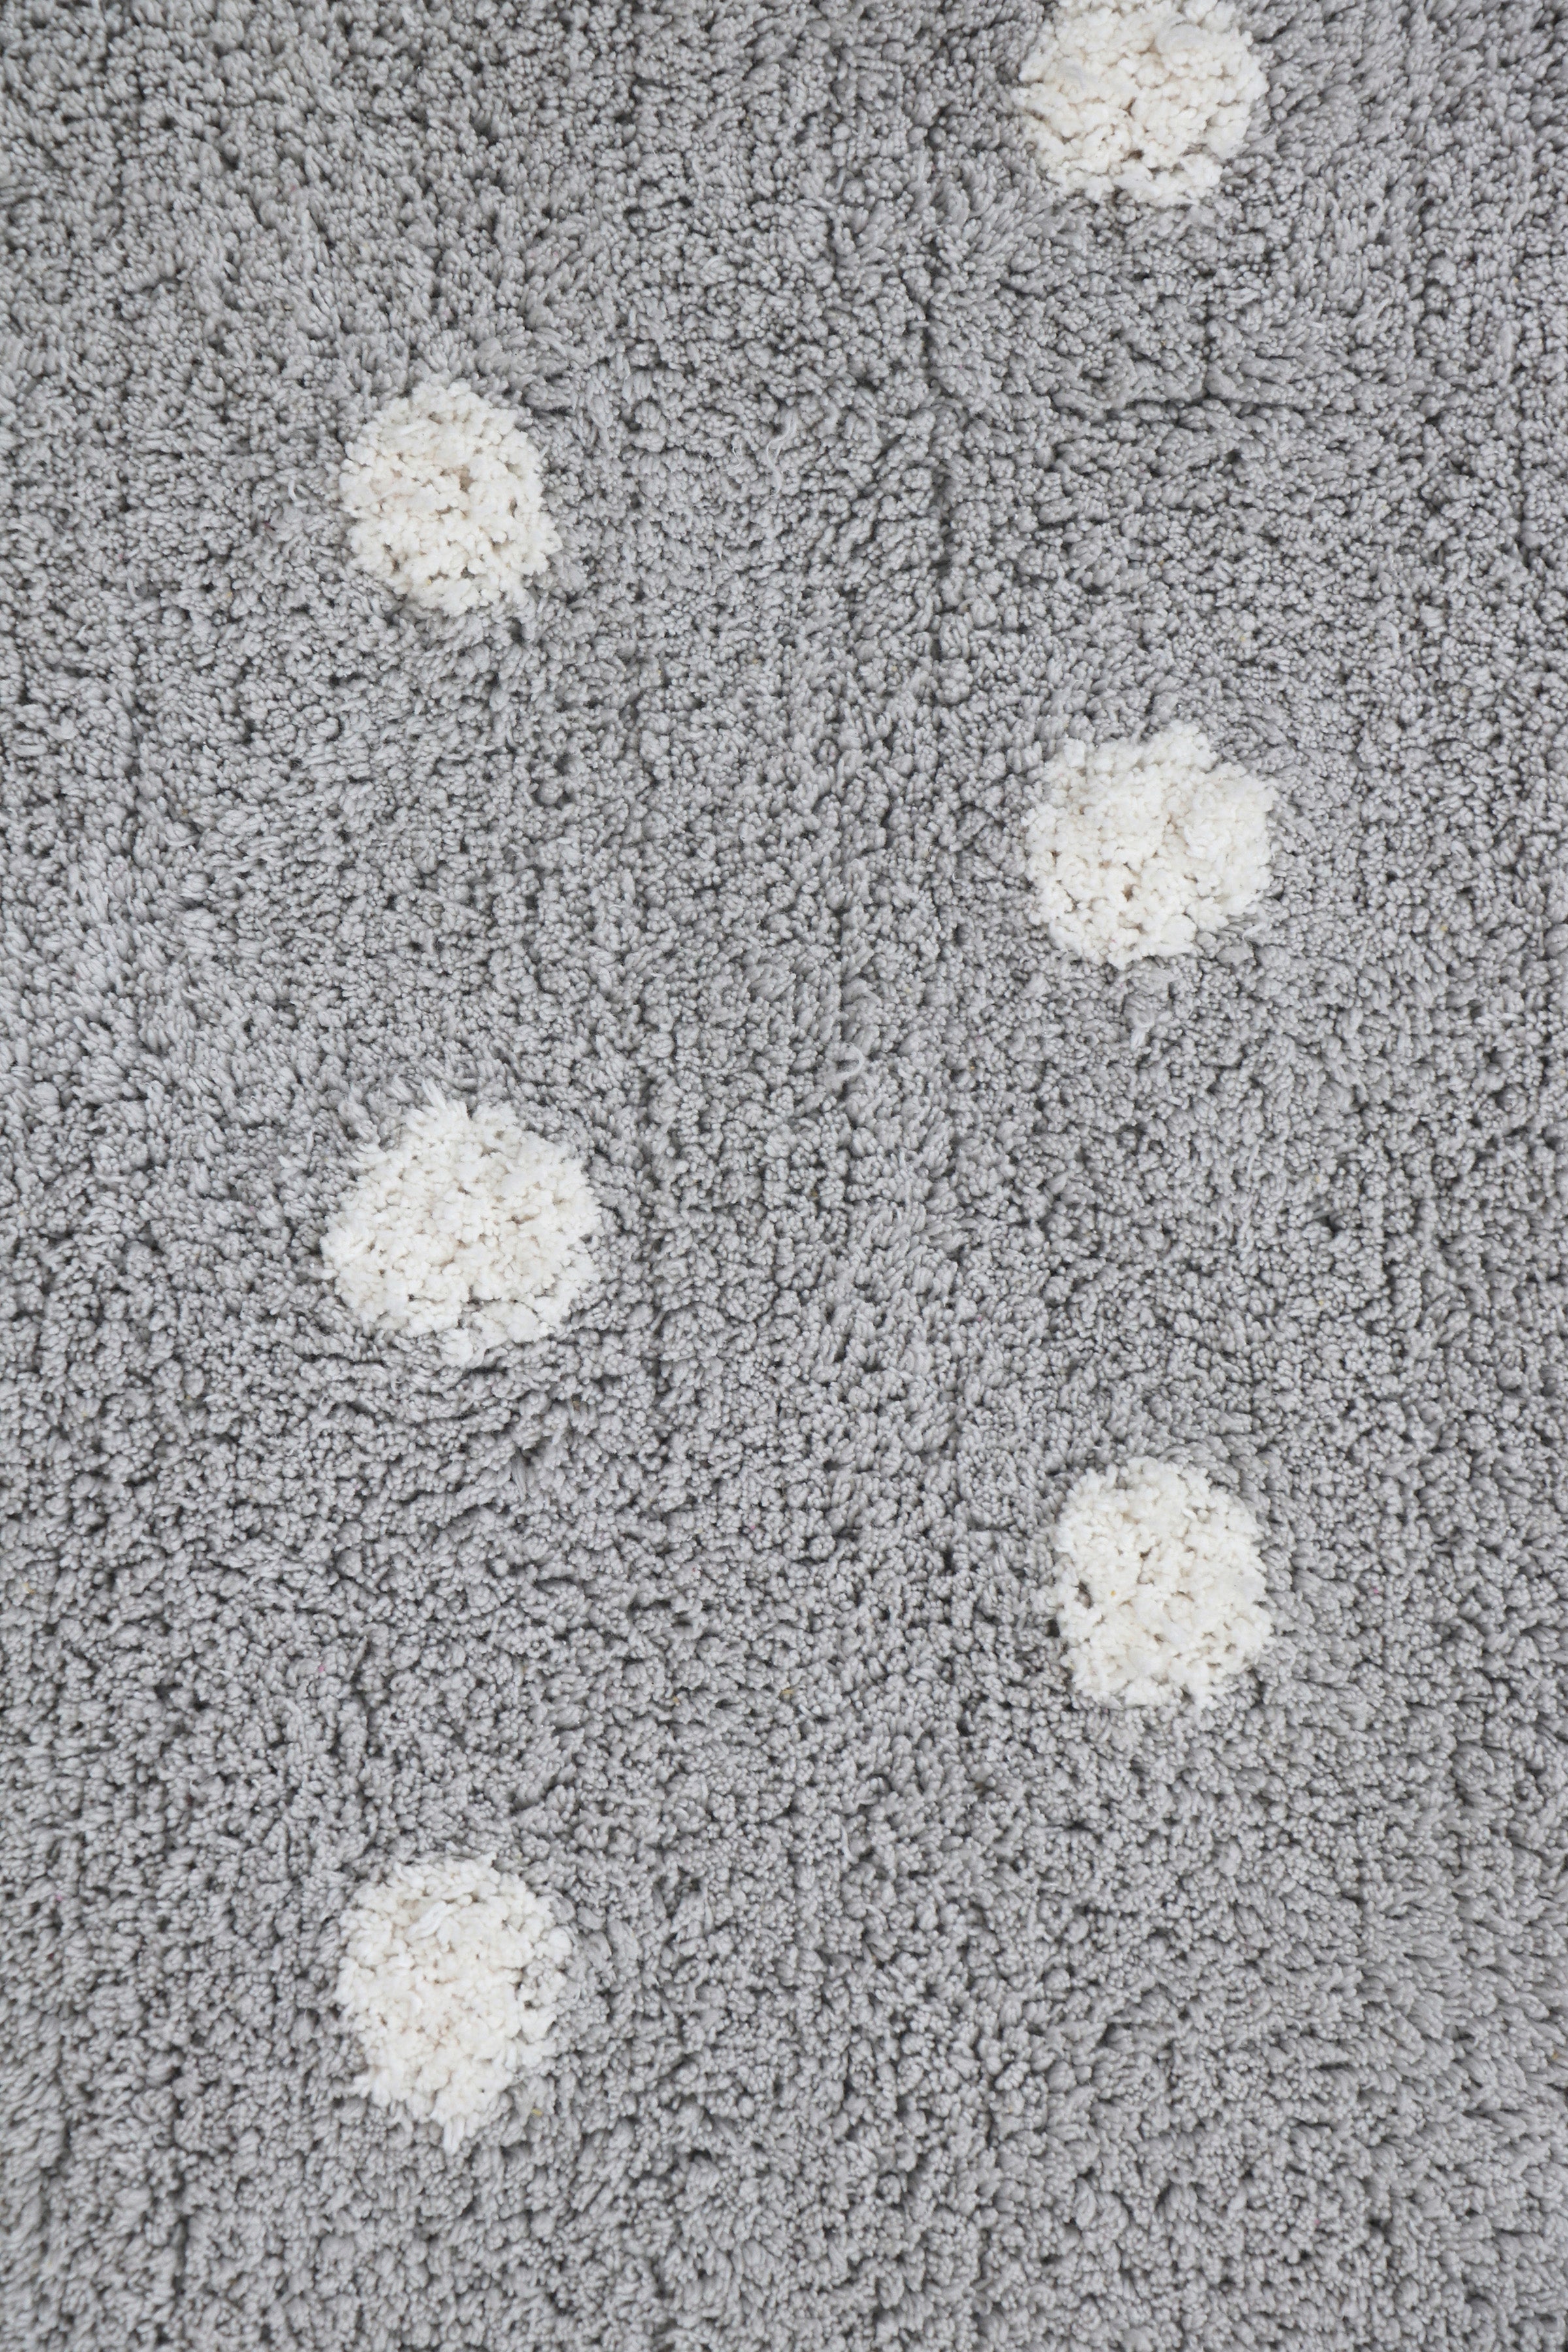 Grey children's rug with white polka dot pattern